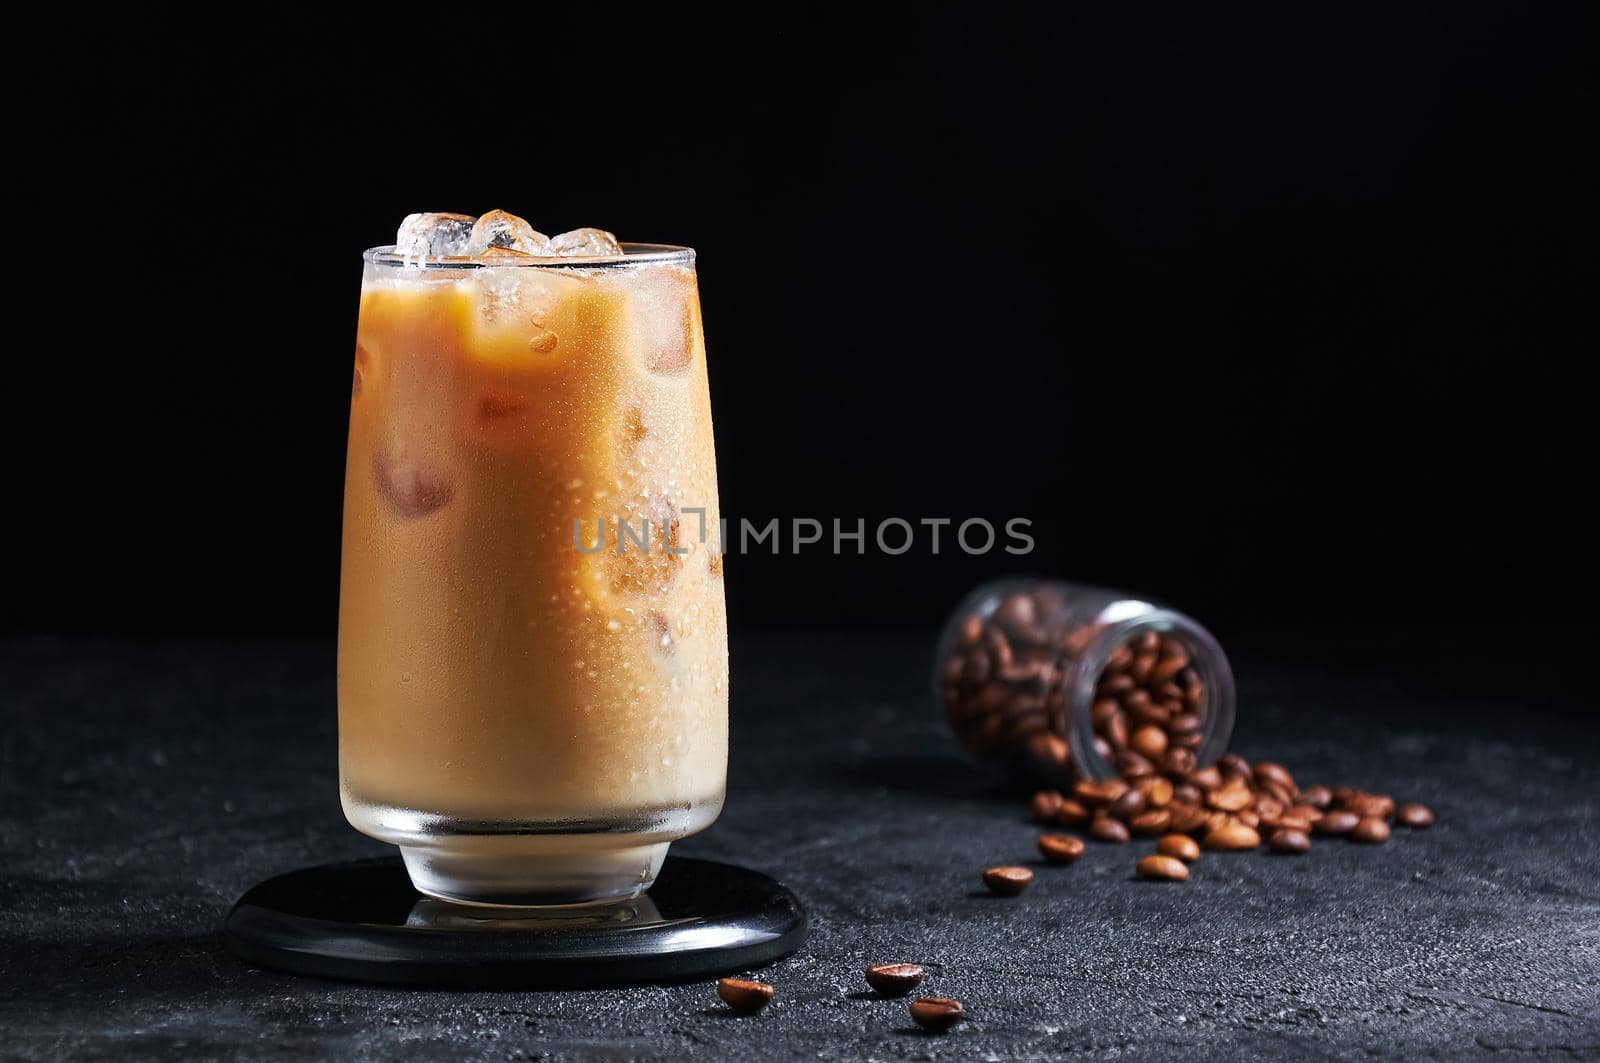 Iced Coffee with Milk in Tall Glass on Dark Background. Concept Refreshing Summer Drink by Svetlana_Belozerova